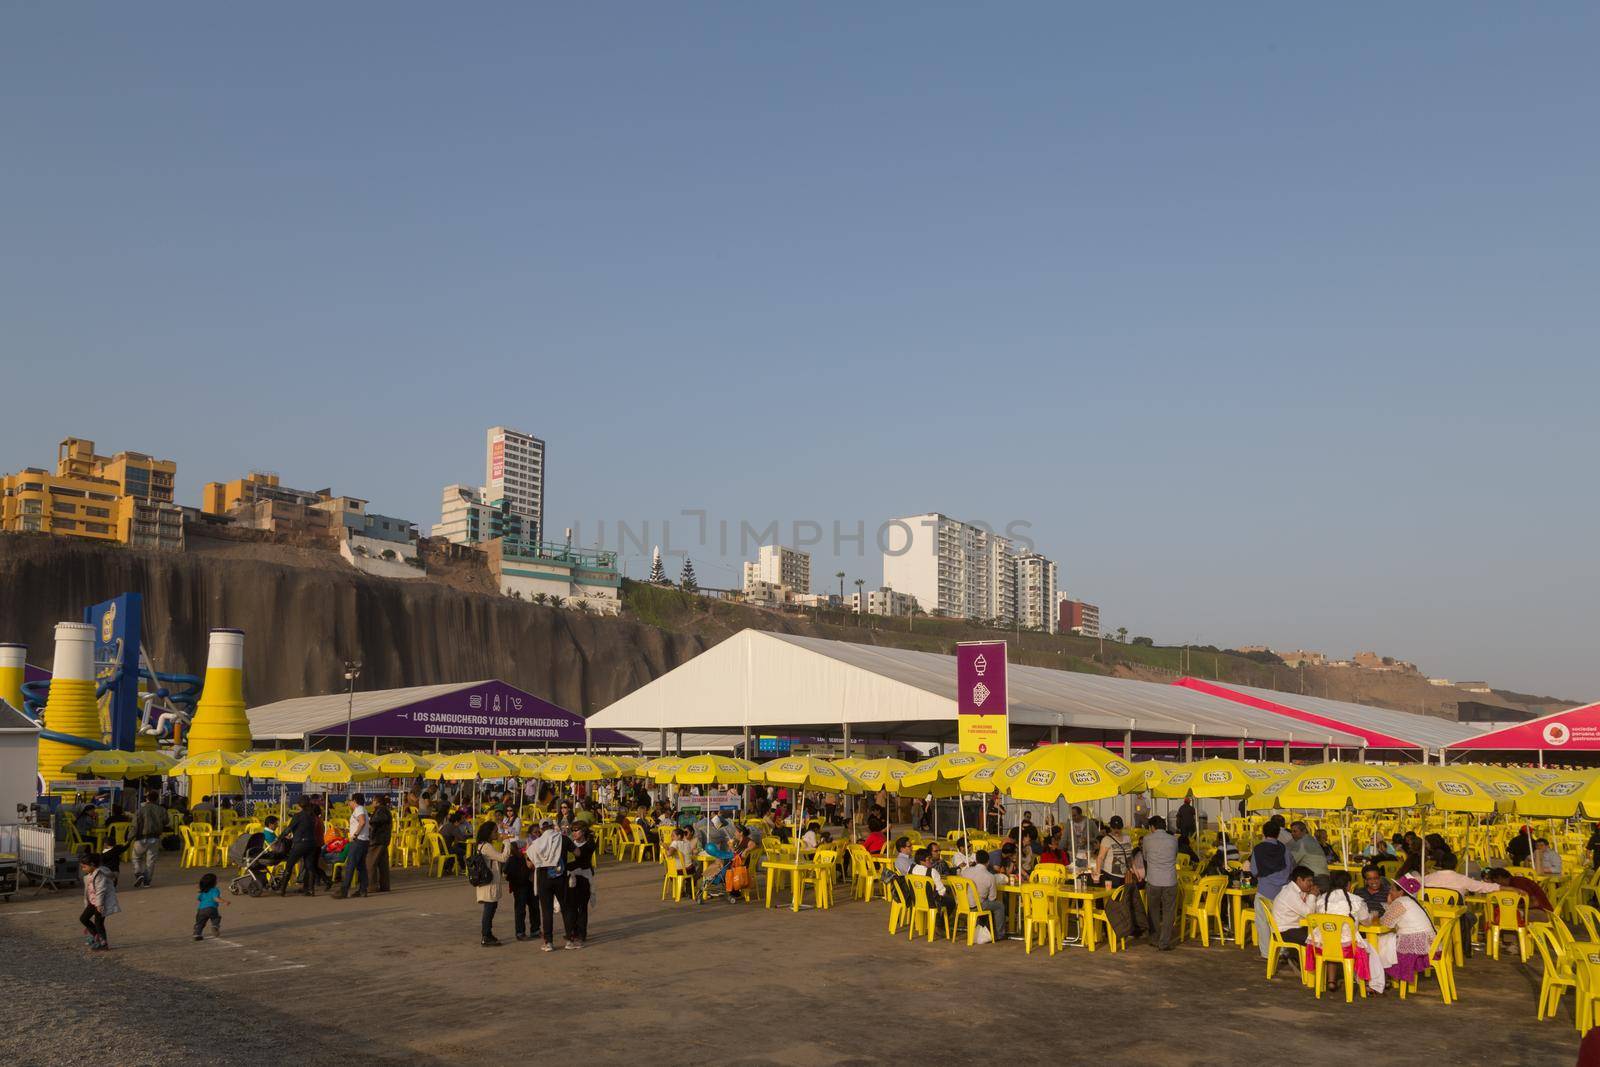 Lima, Peru - September 4, 2015: People visiting the annual Mistura Food Festival